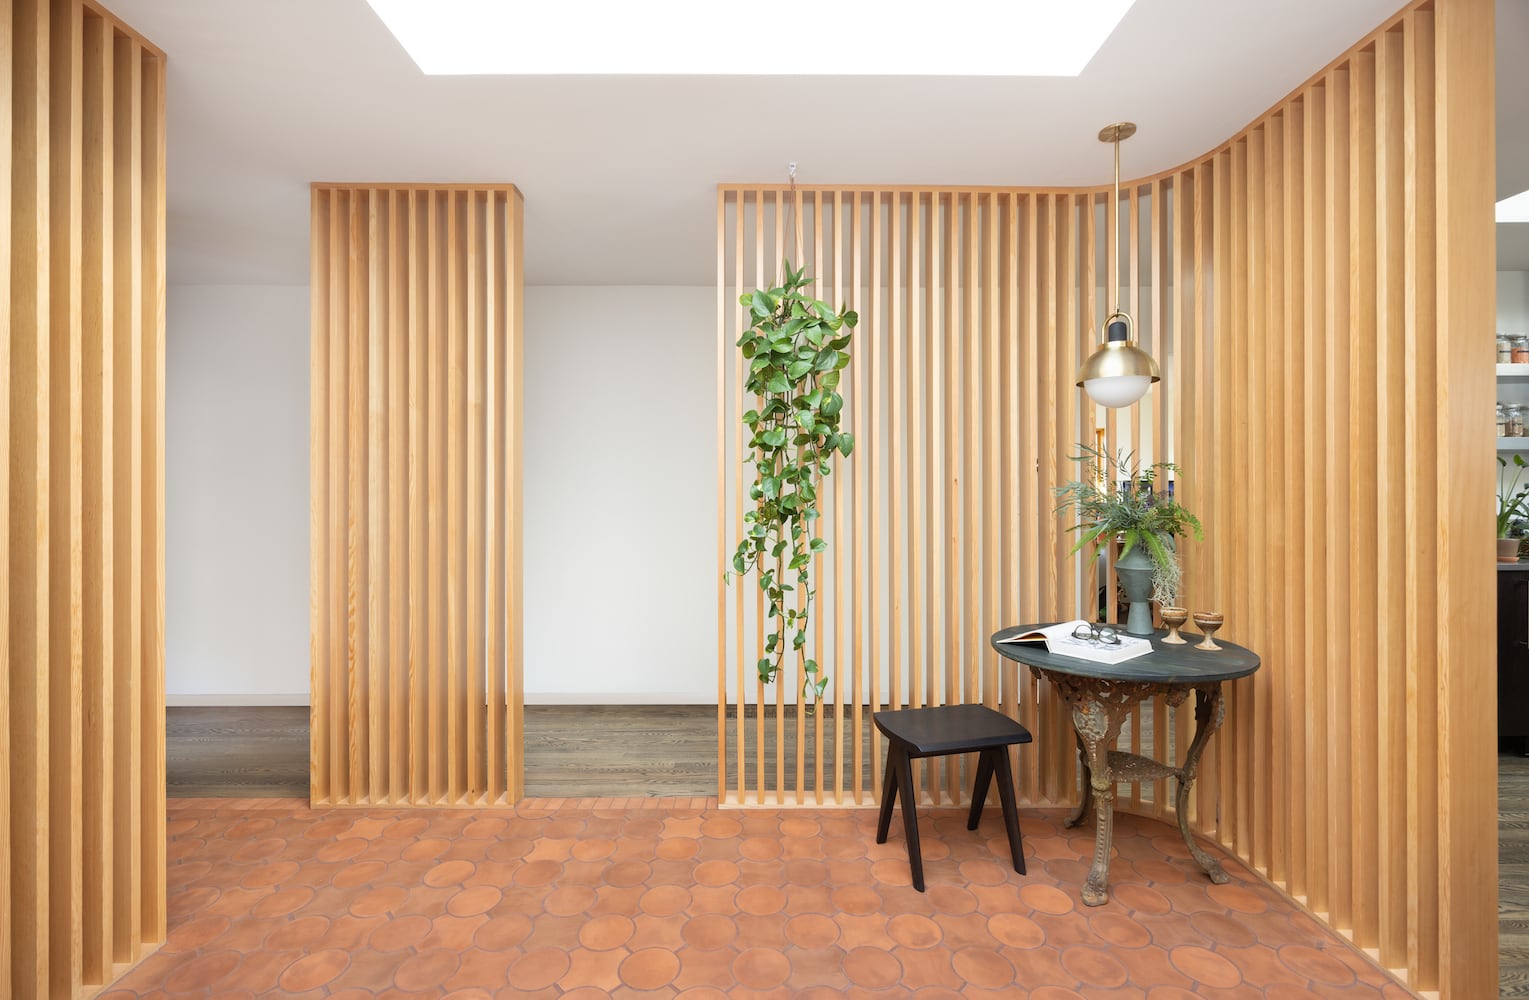 Vertical wood slats surround this one of a kind bathroom atrium design